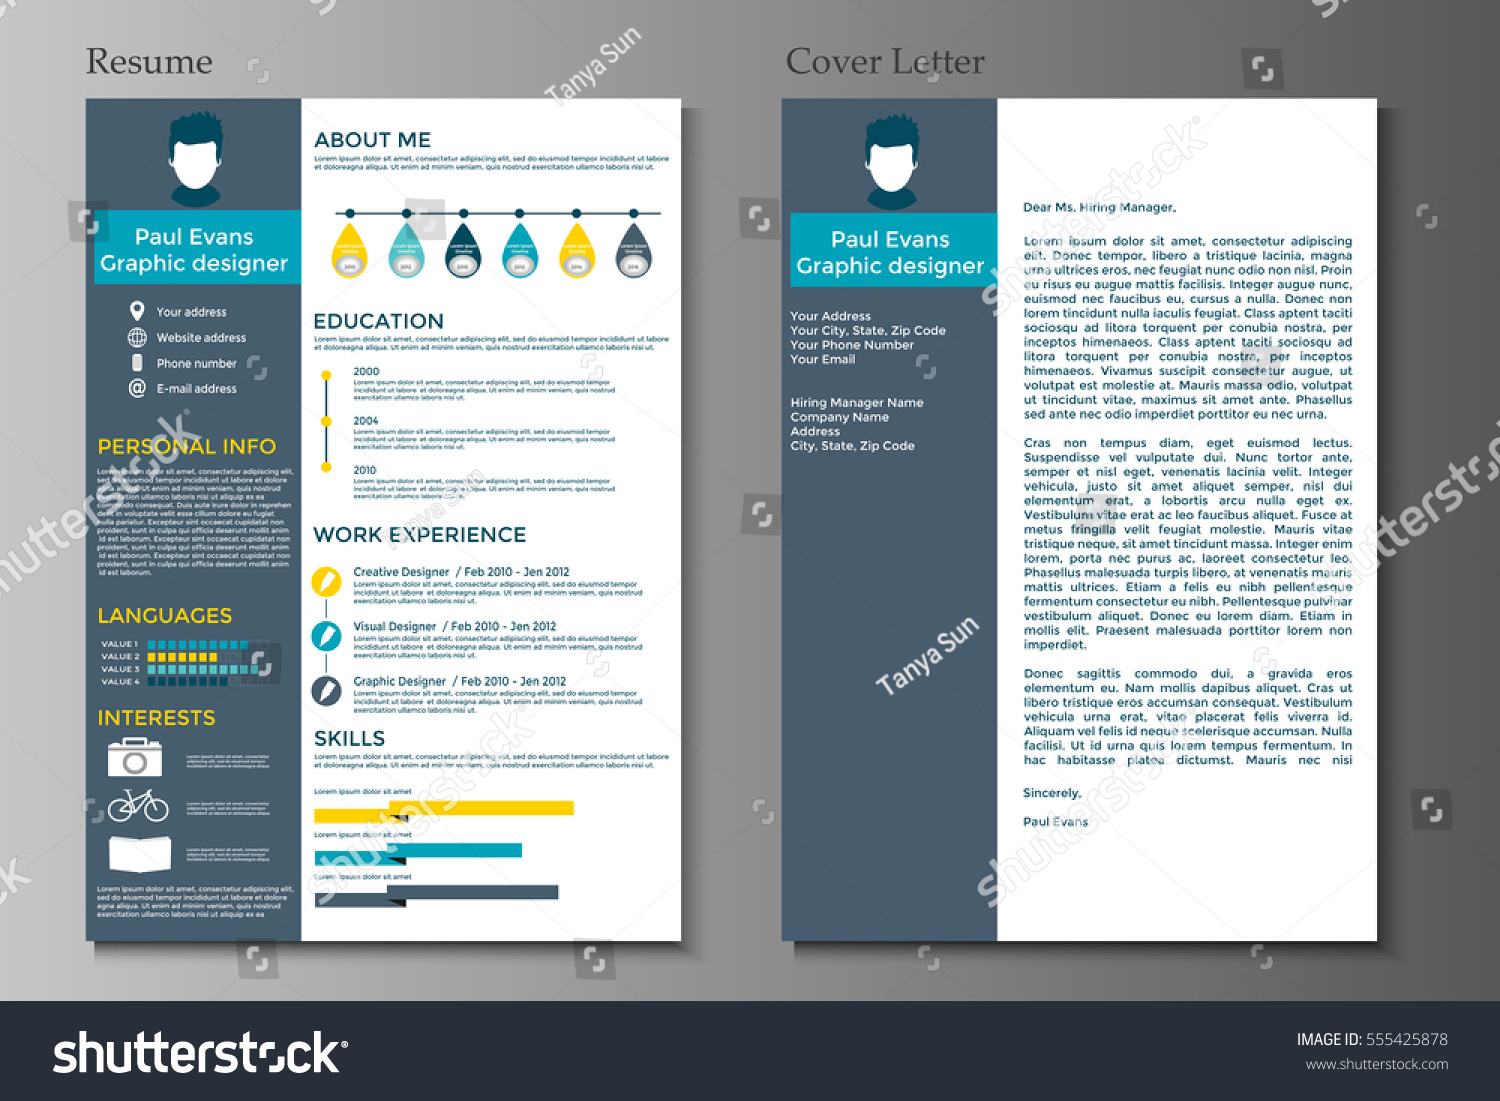 resume cover letter flat style design stock vector